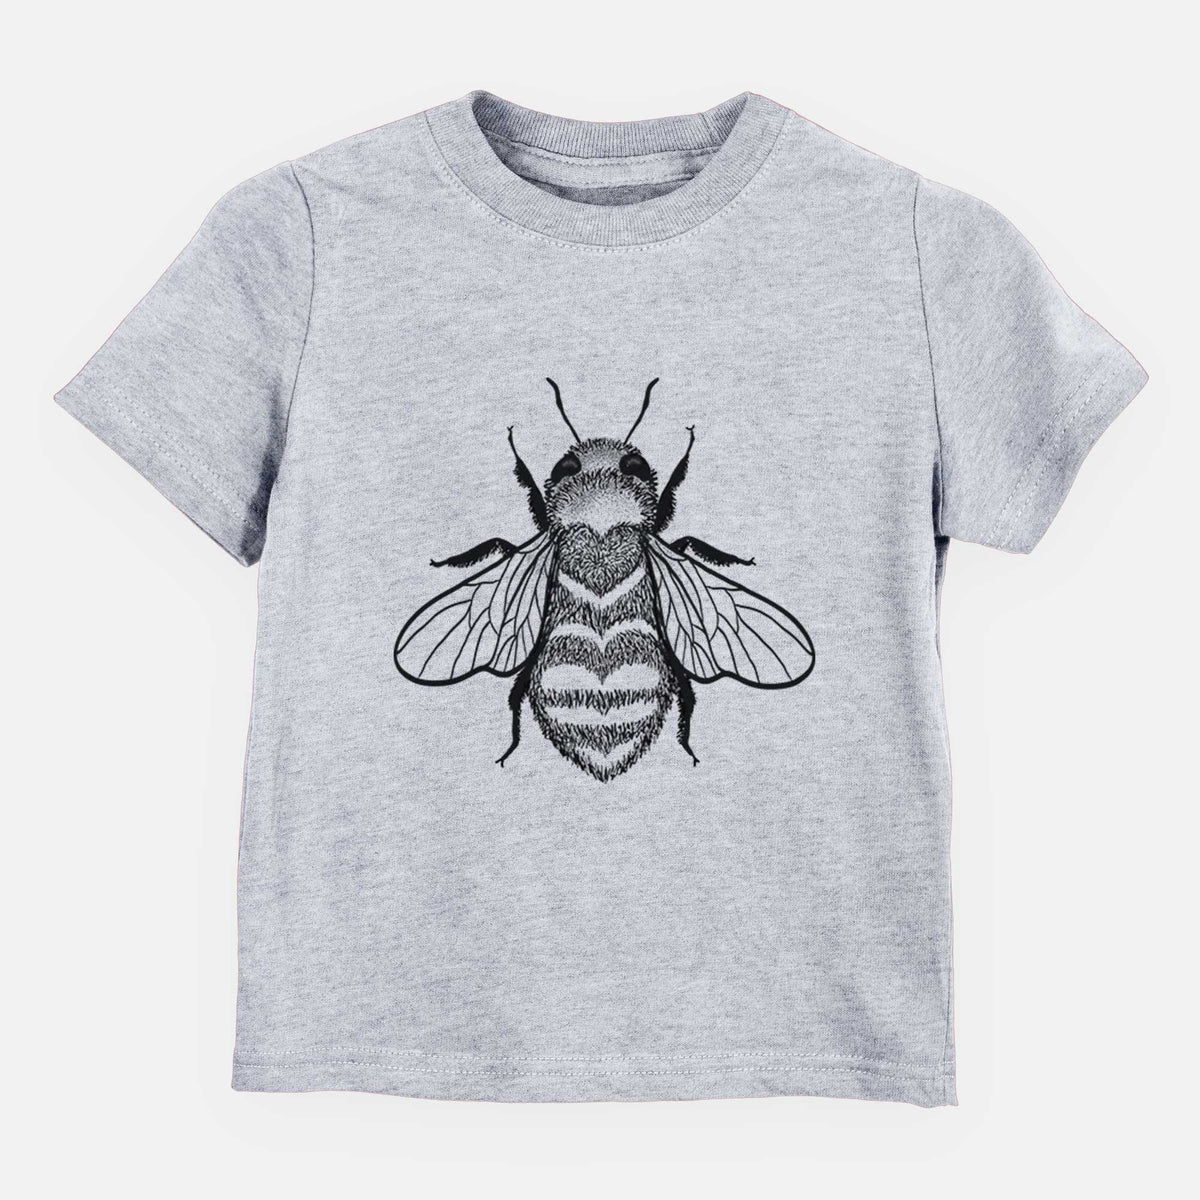 Bee Love - Kids Shirt